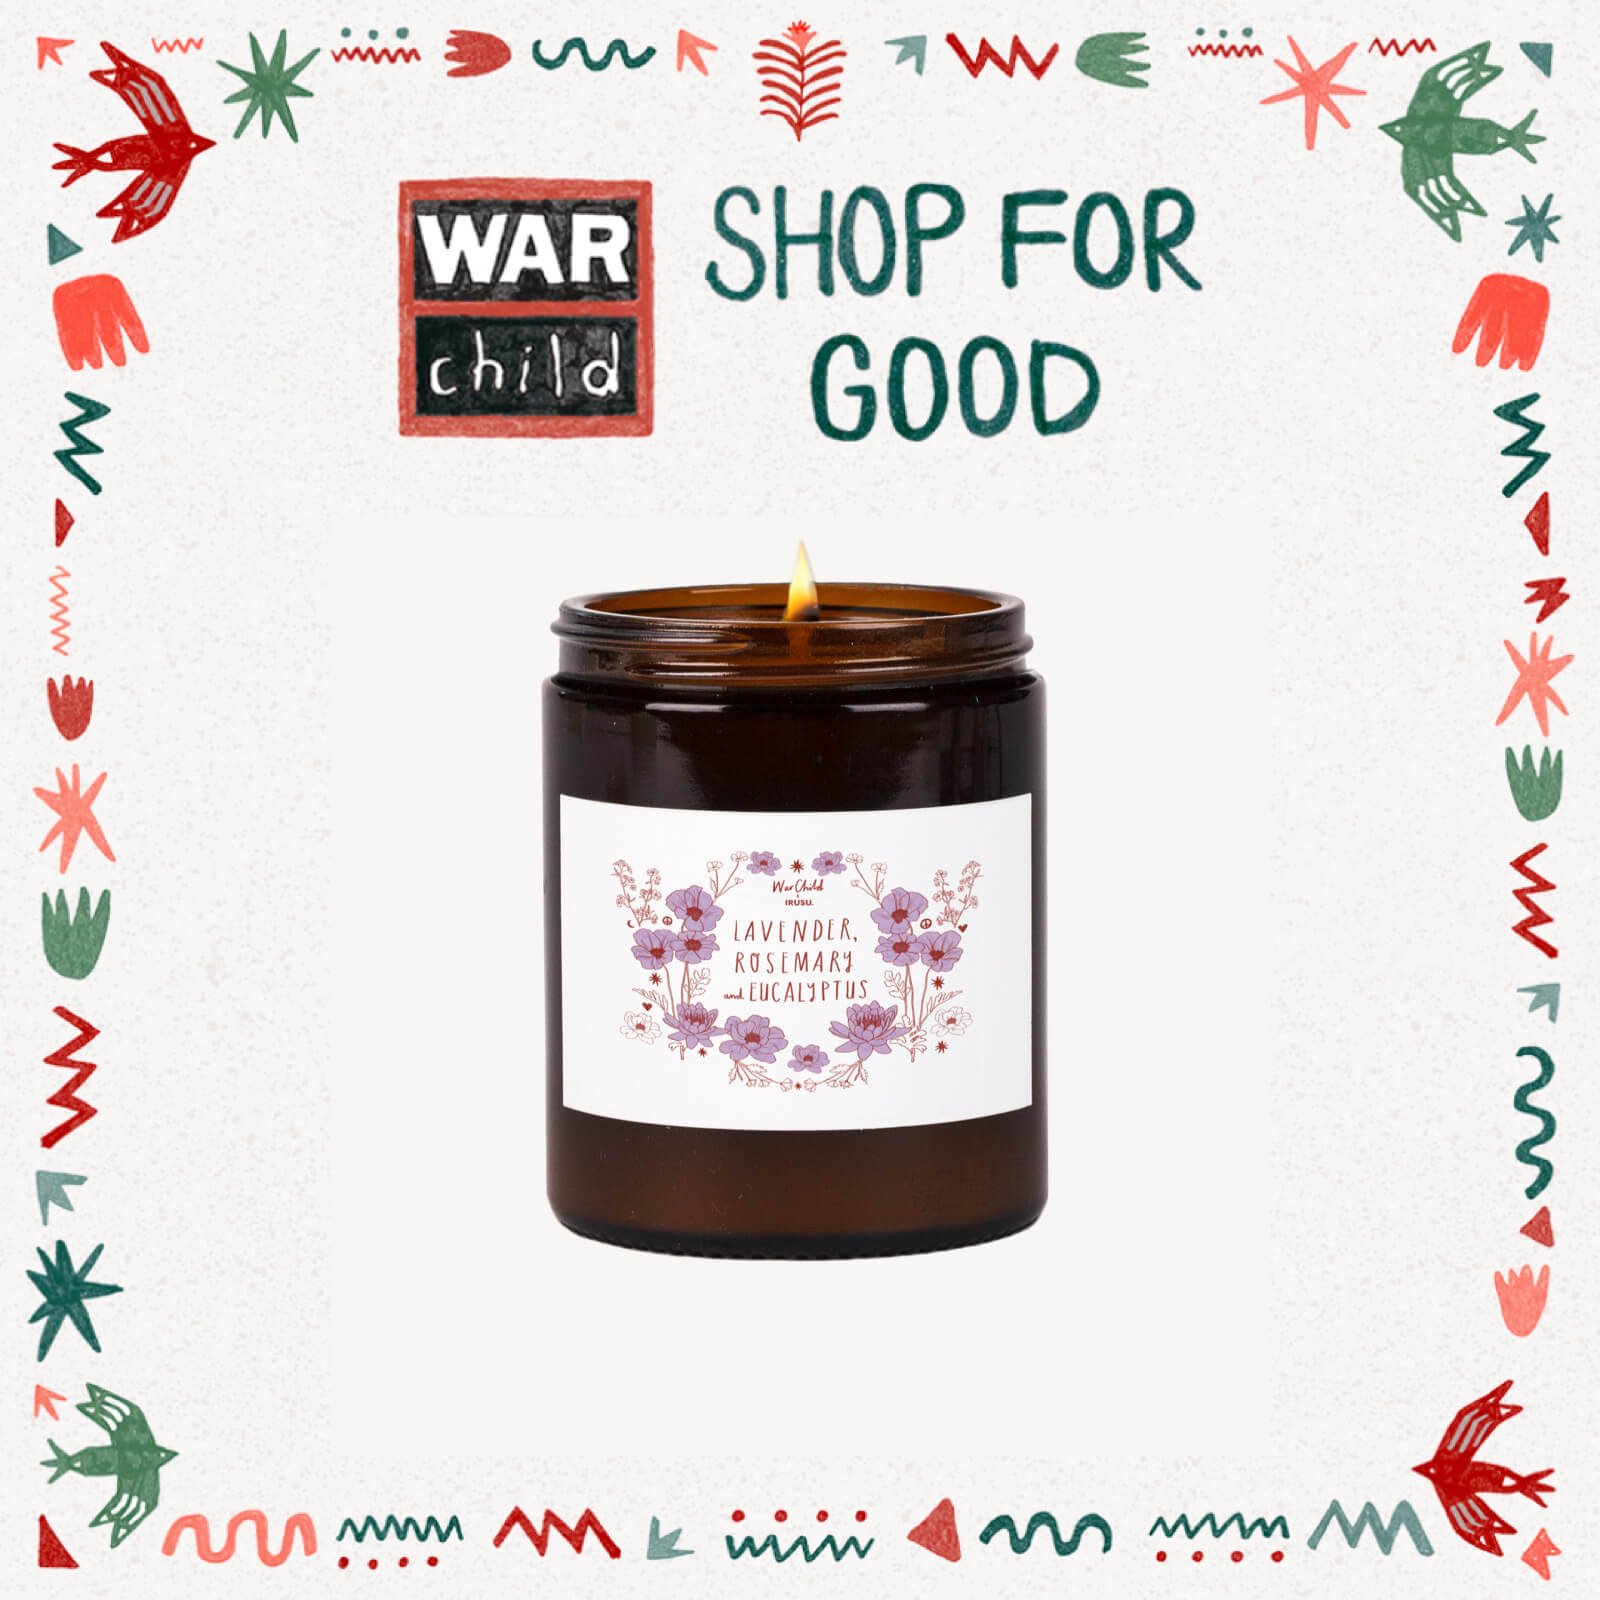 DUSK-candle-Lavender-Rosemary-Eucalyptus-war-child-shop-for-good-collaboration-IRUSU.jpg